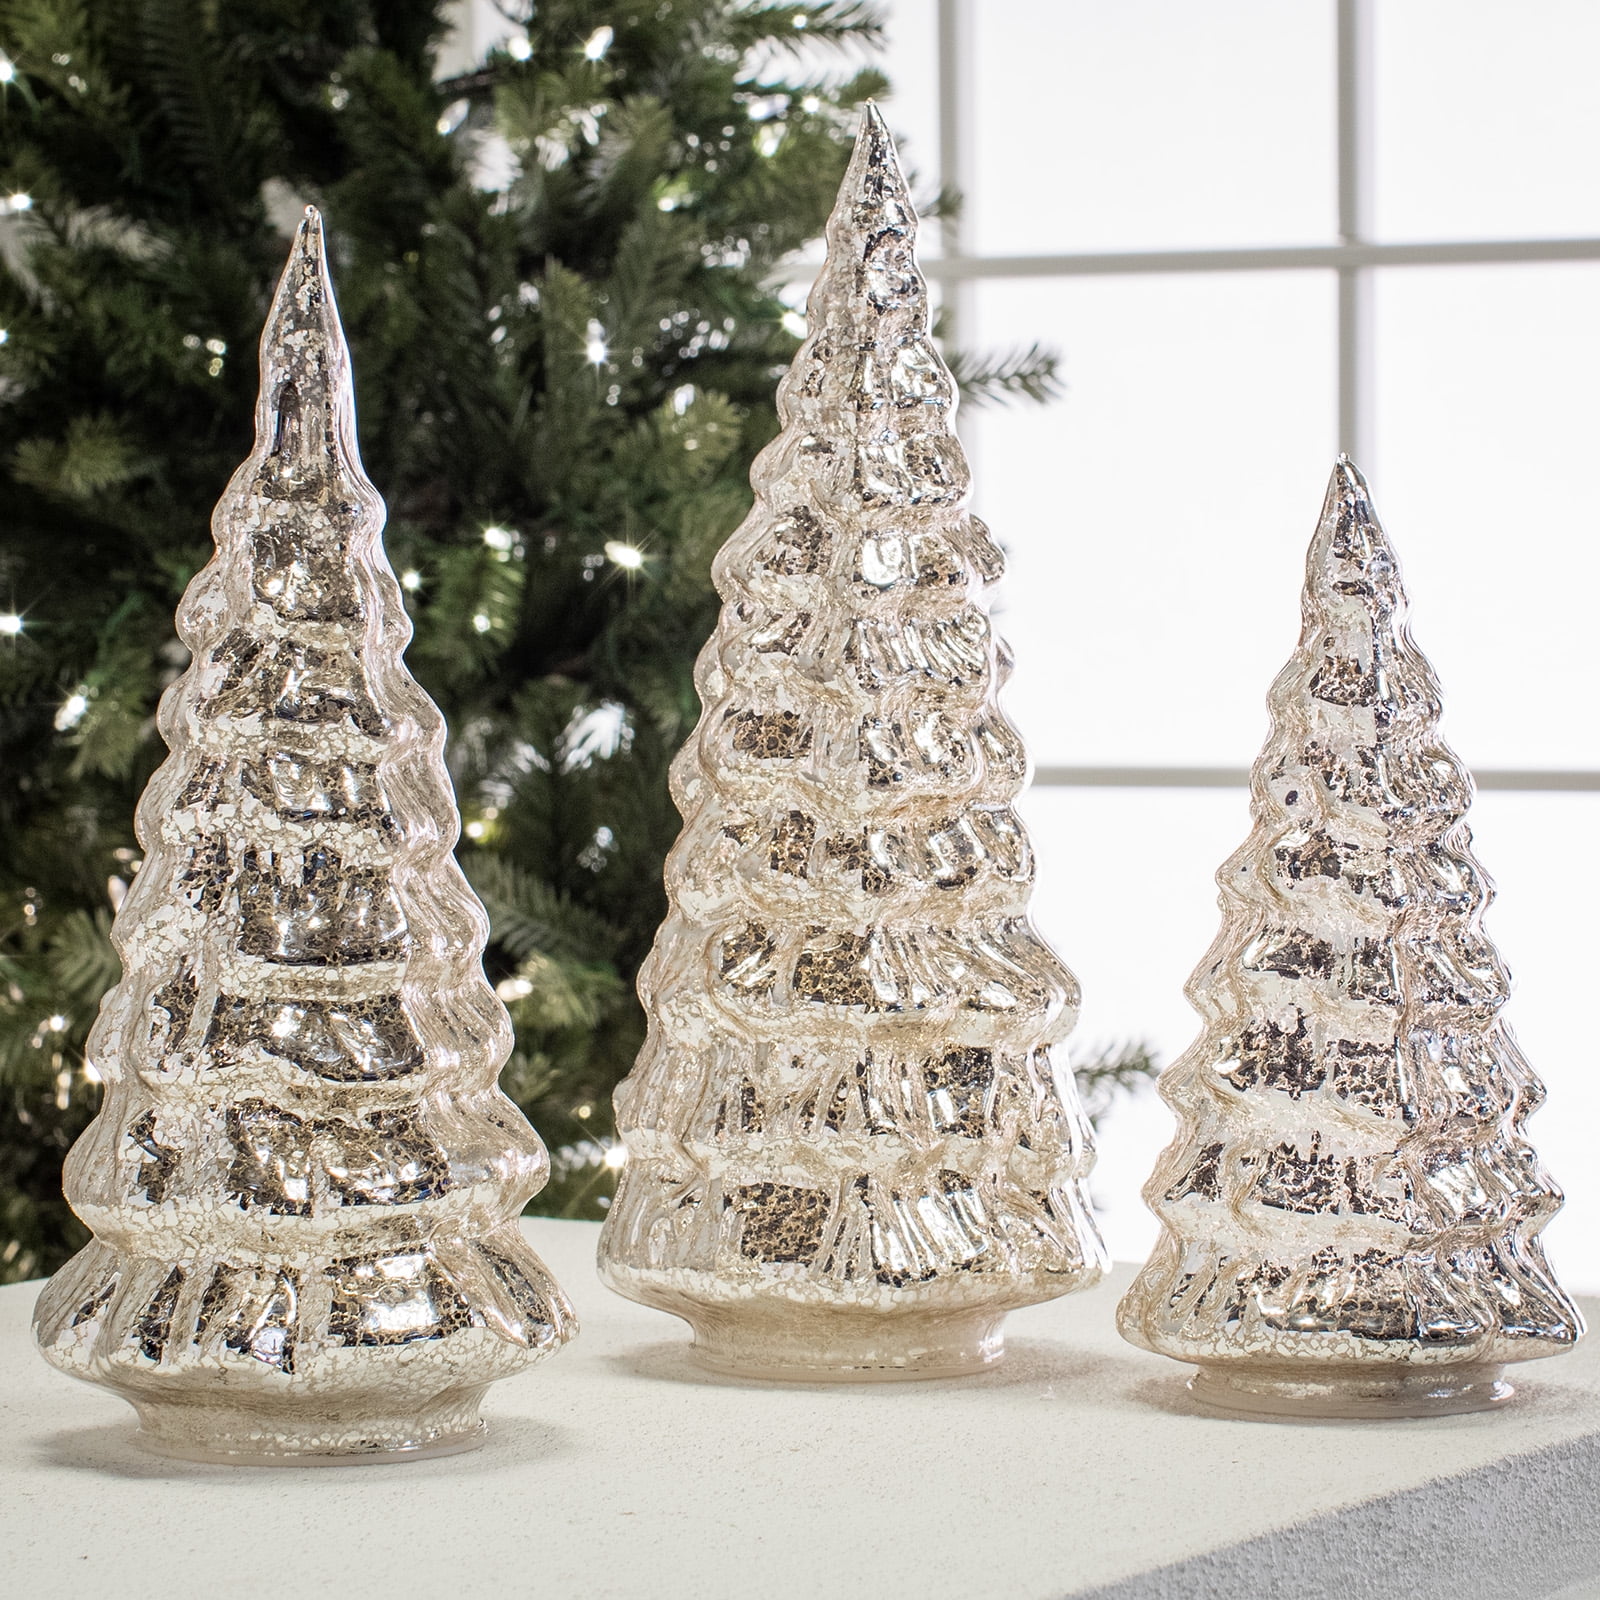 Christmas Trees Set Of 3. lighted mercury glass christmas trees belham livi...